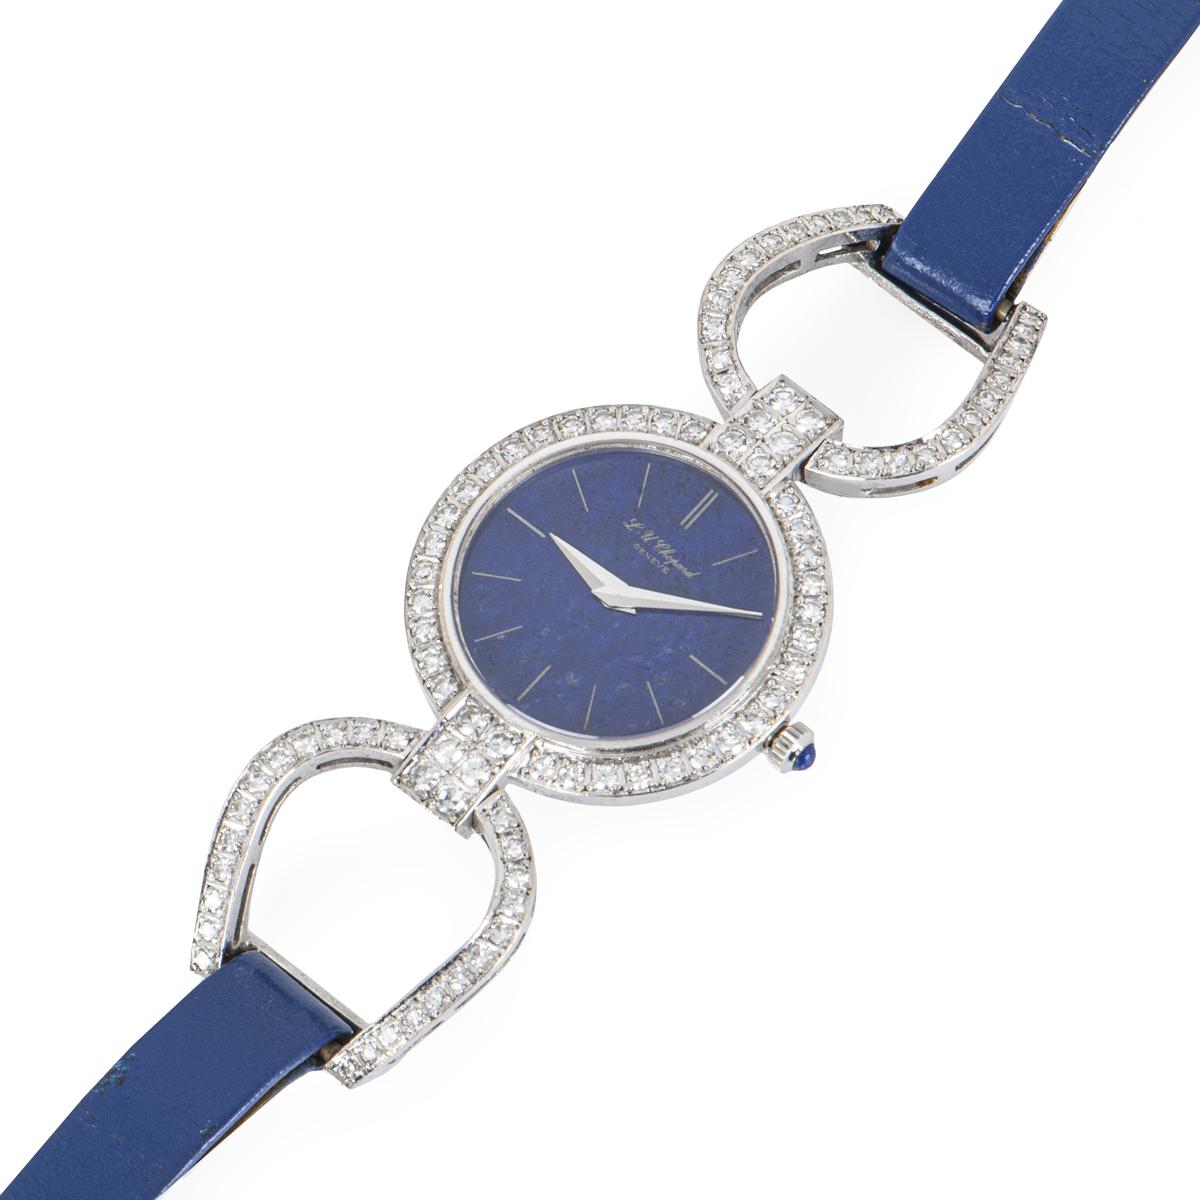 lu chopard diamond watch